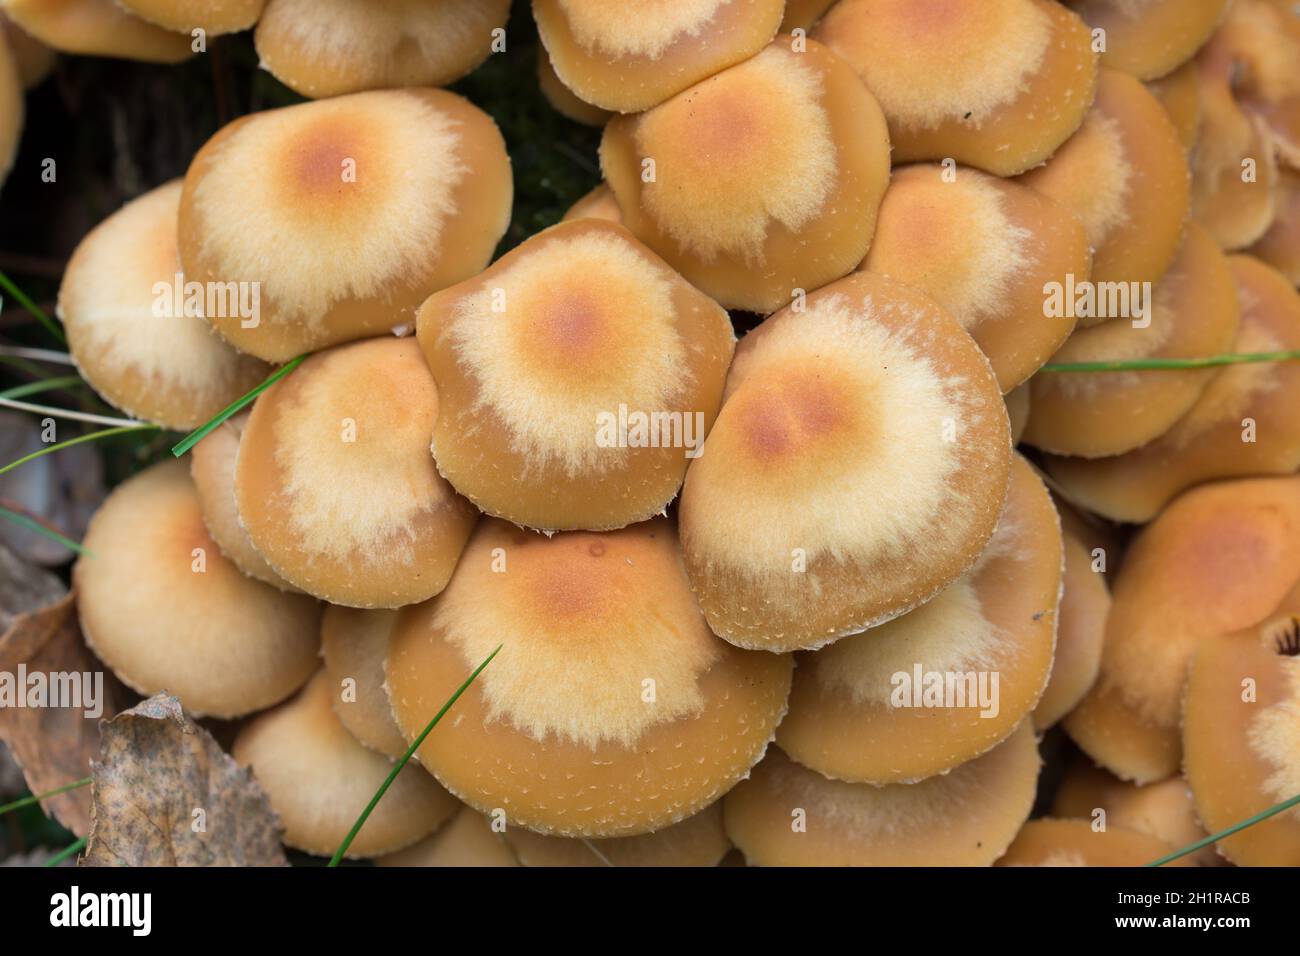 Kuehneromyces mutabilis, sheathed woodtuft mushroom  in forest, closeup selective focus Stock Photo